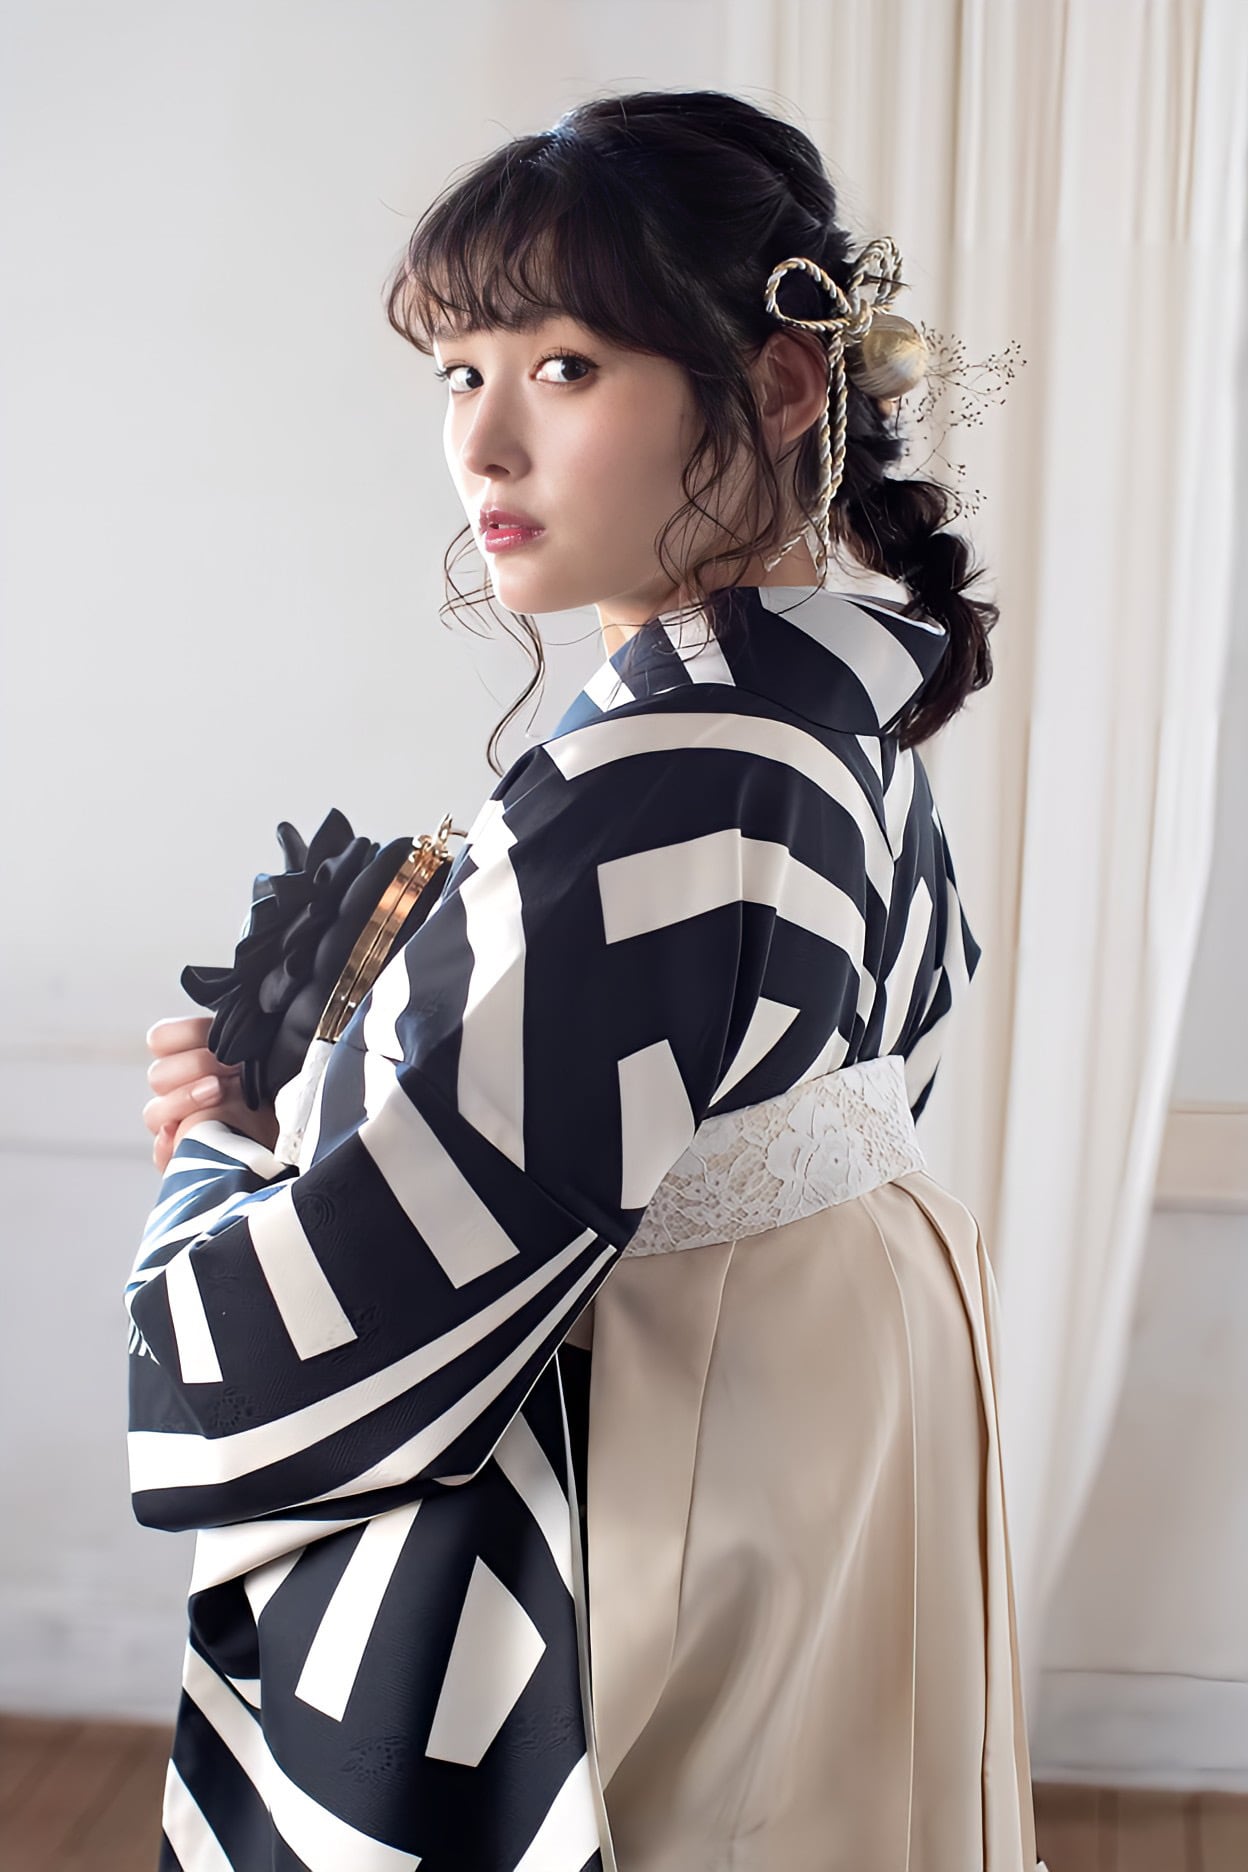 Kimono Sienne 卒業式袴3点セット 幾何学模様 二尺袖着物 袴 白黒